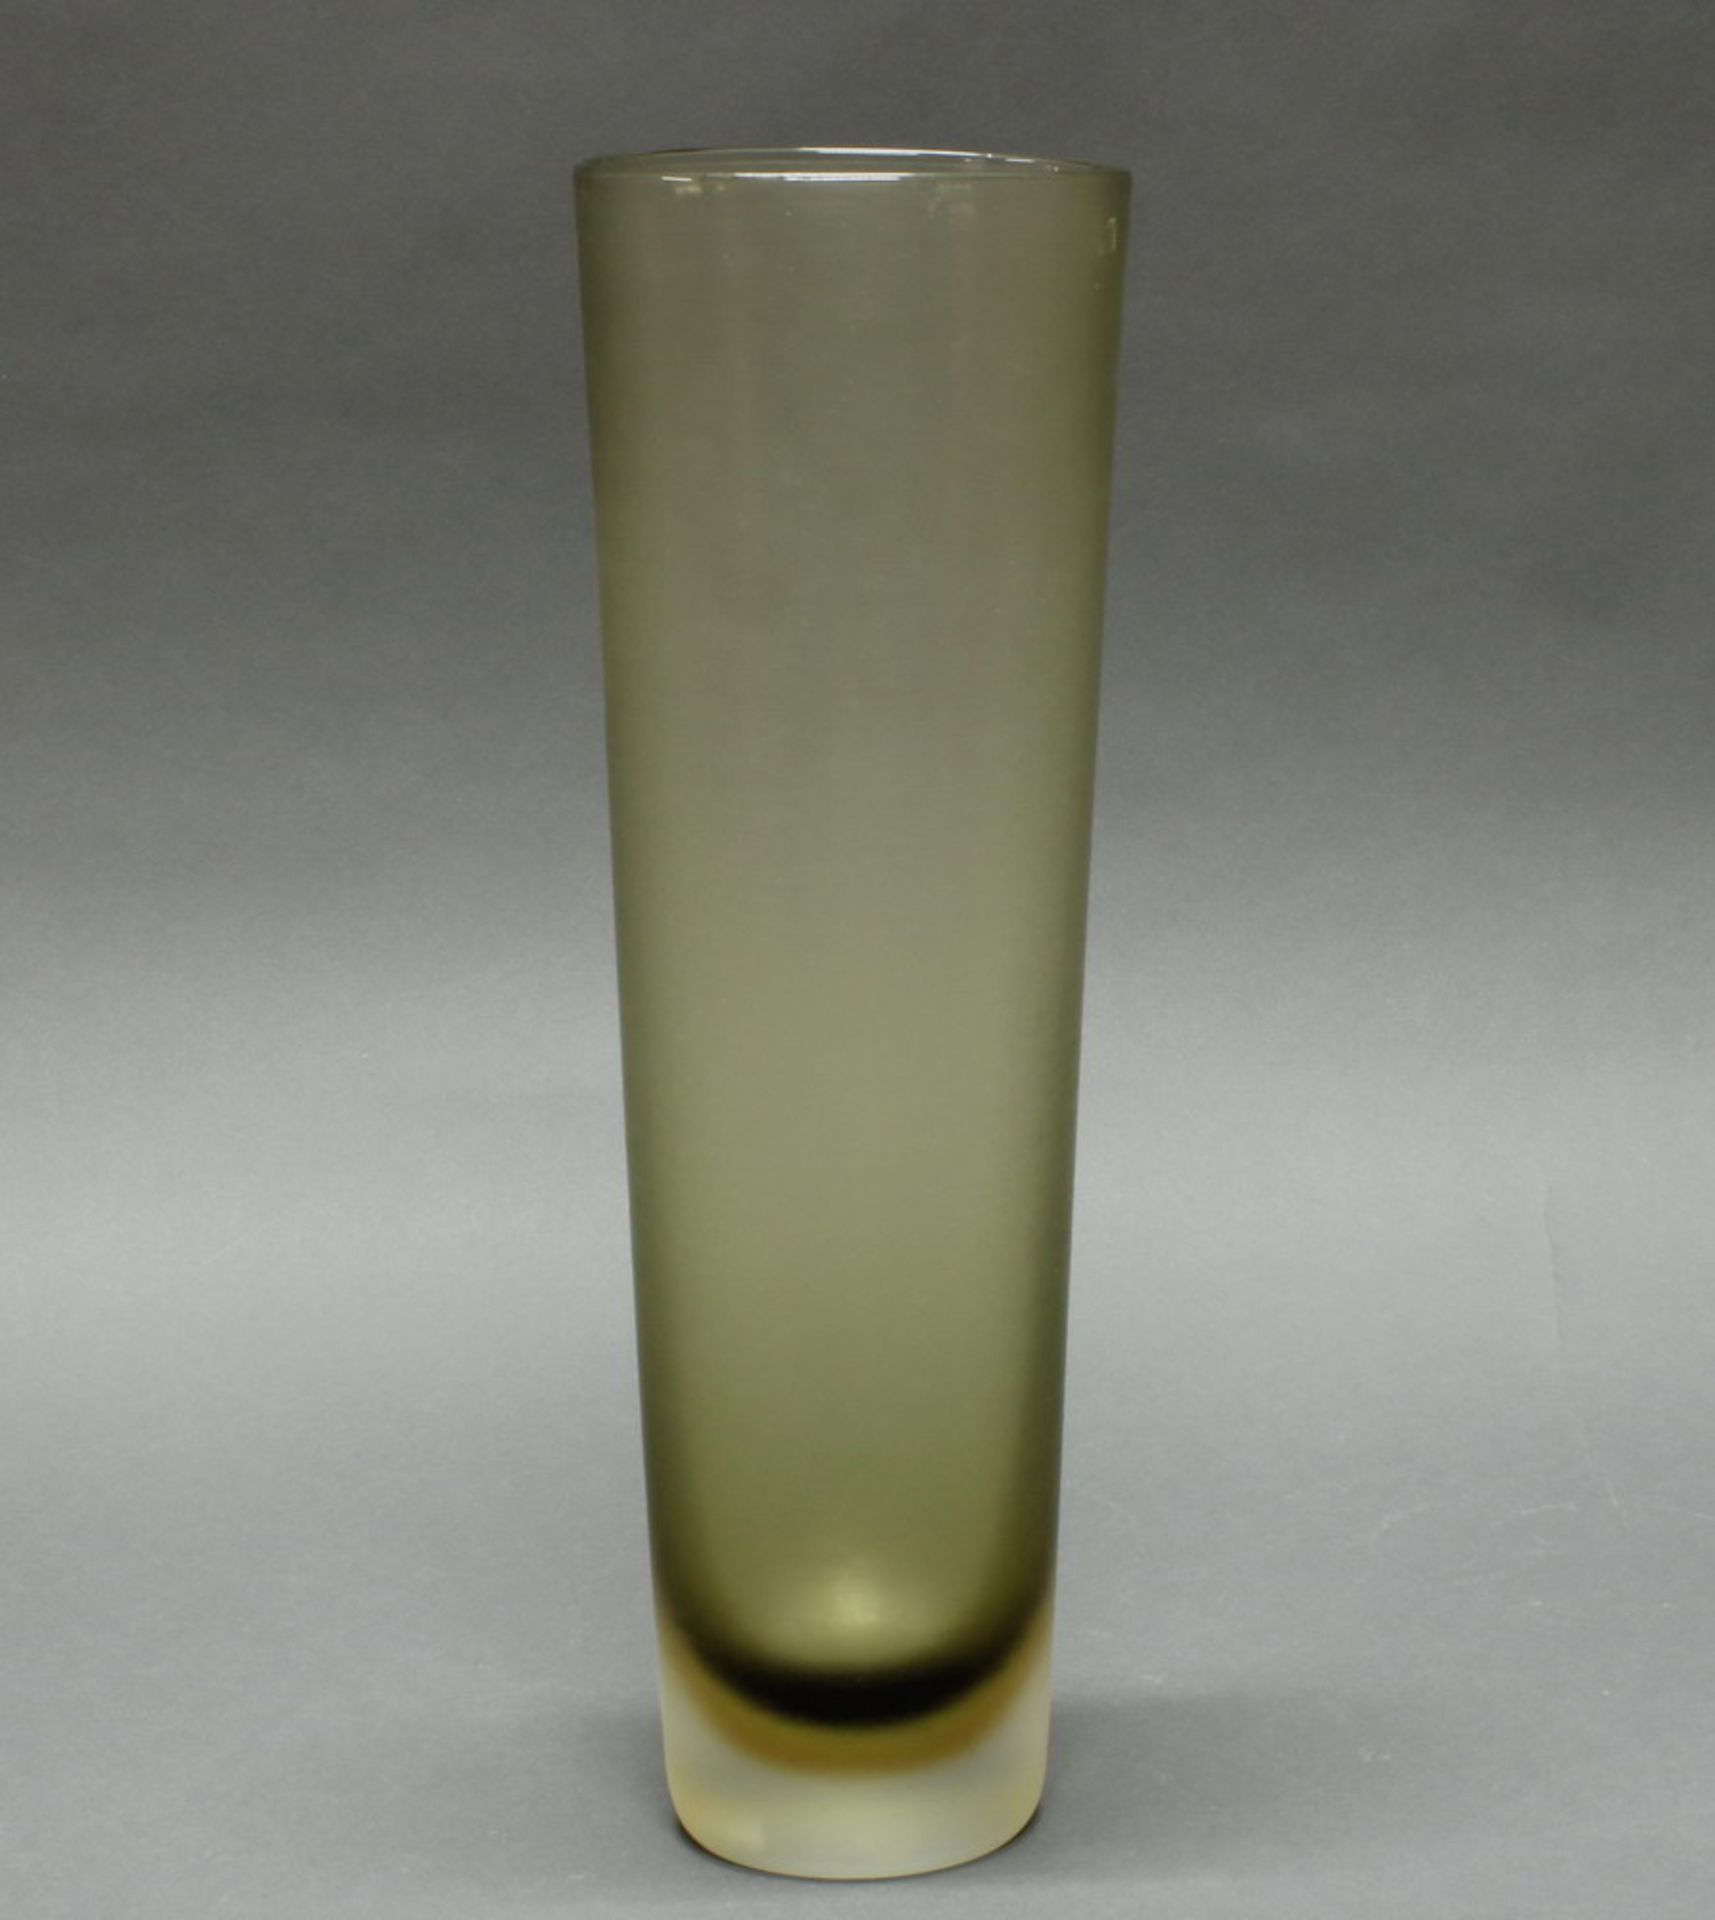 Vase, "Inciso", Paolo Venini, Murano, um 1956, Glas, hell-oliv bis bernsteingelbe Farbigkeit,